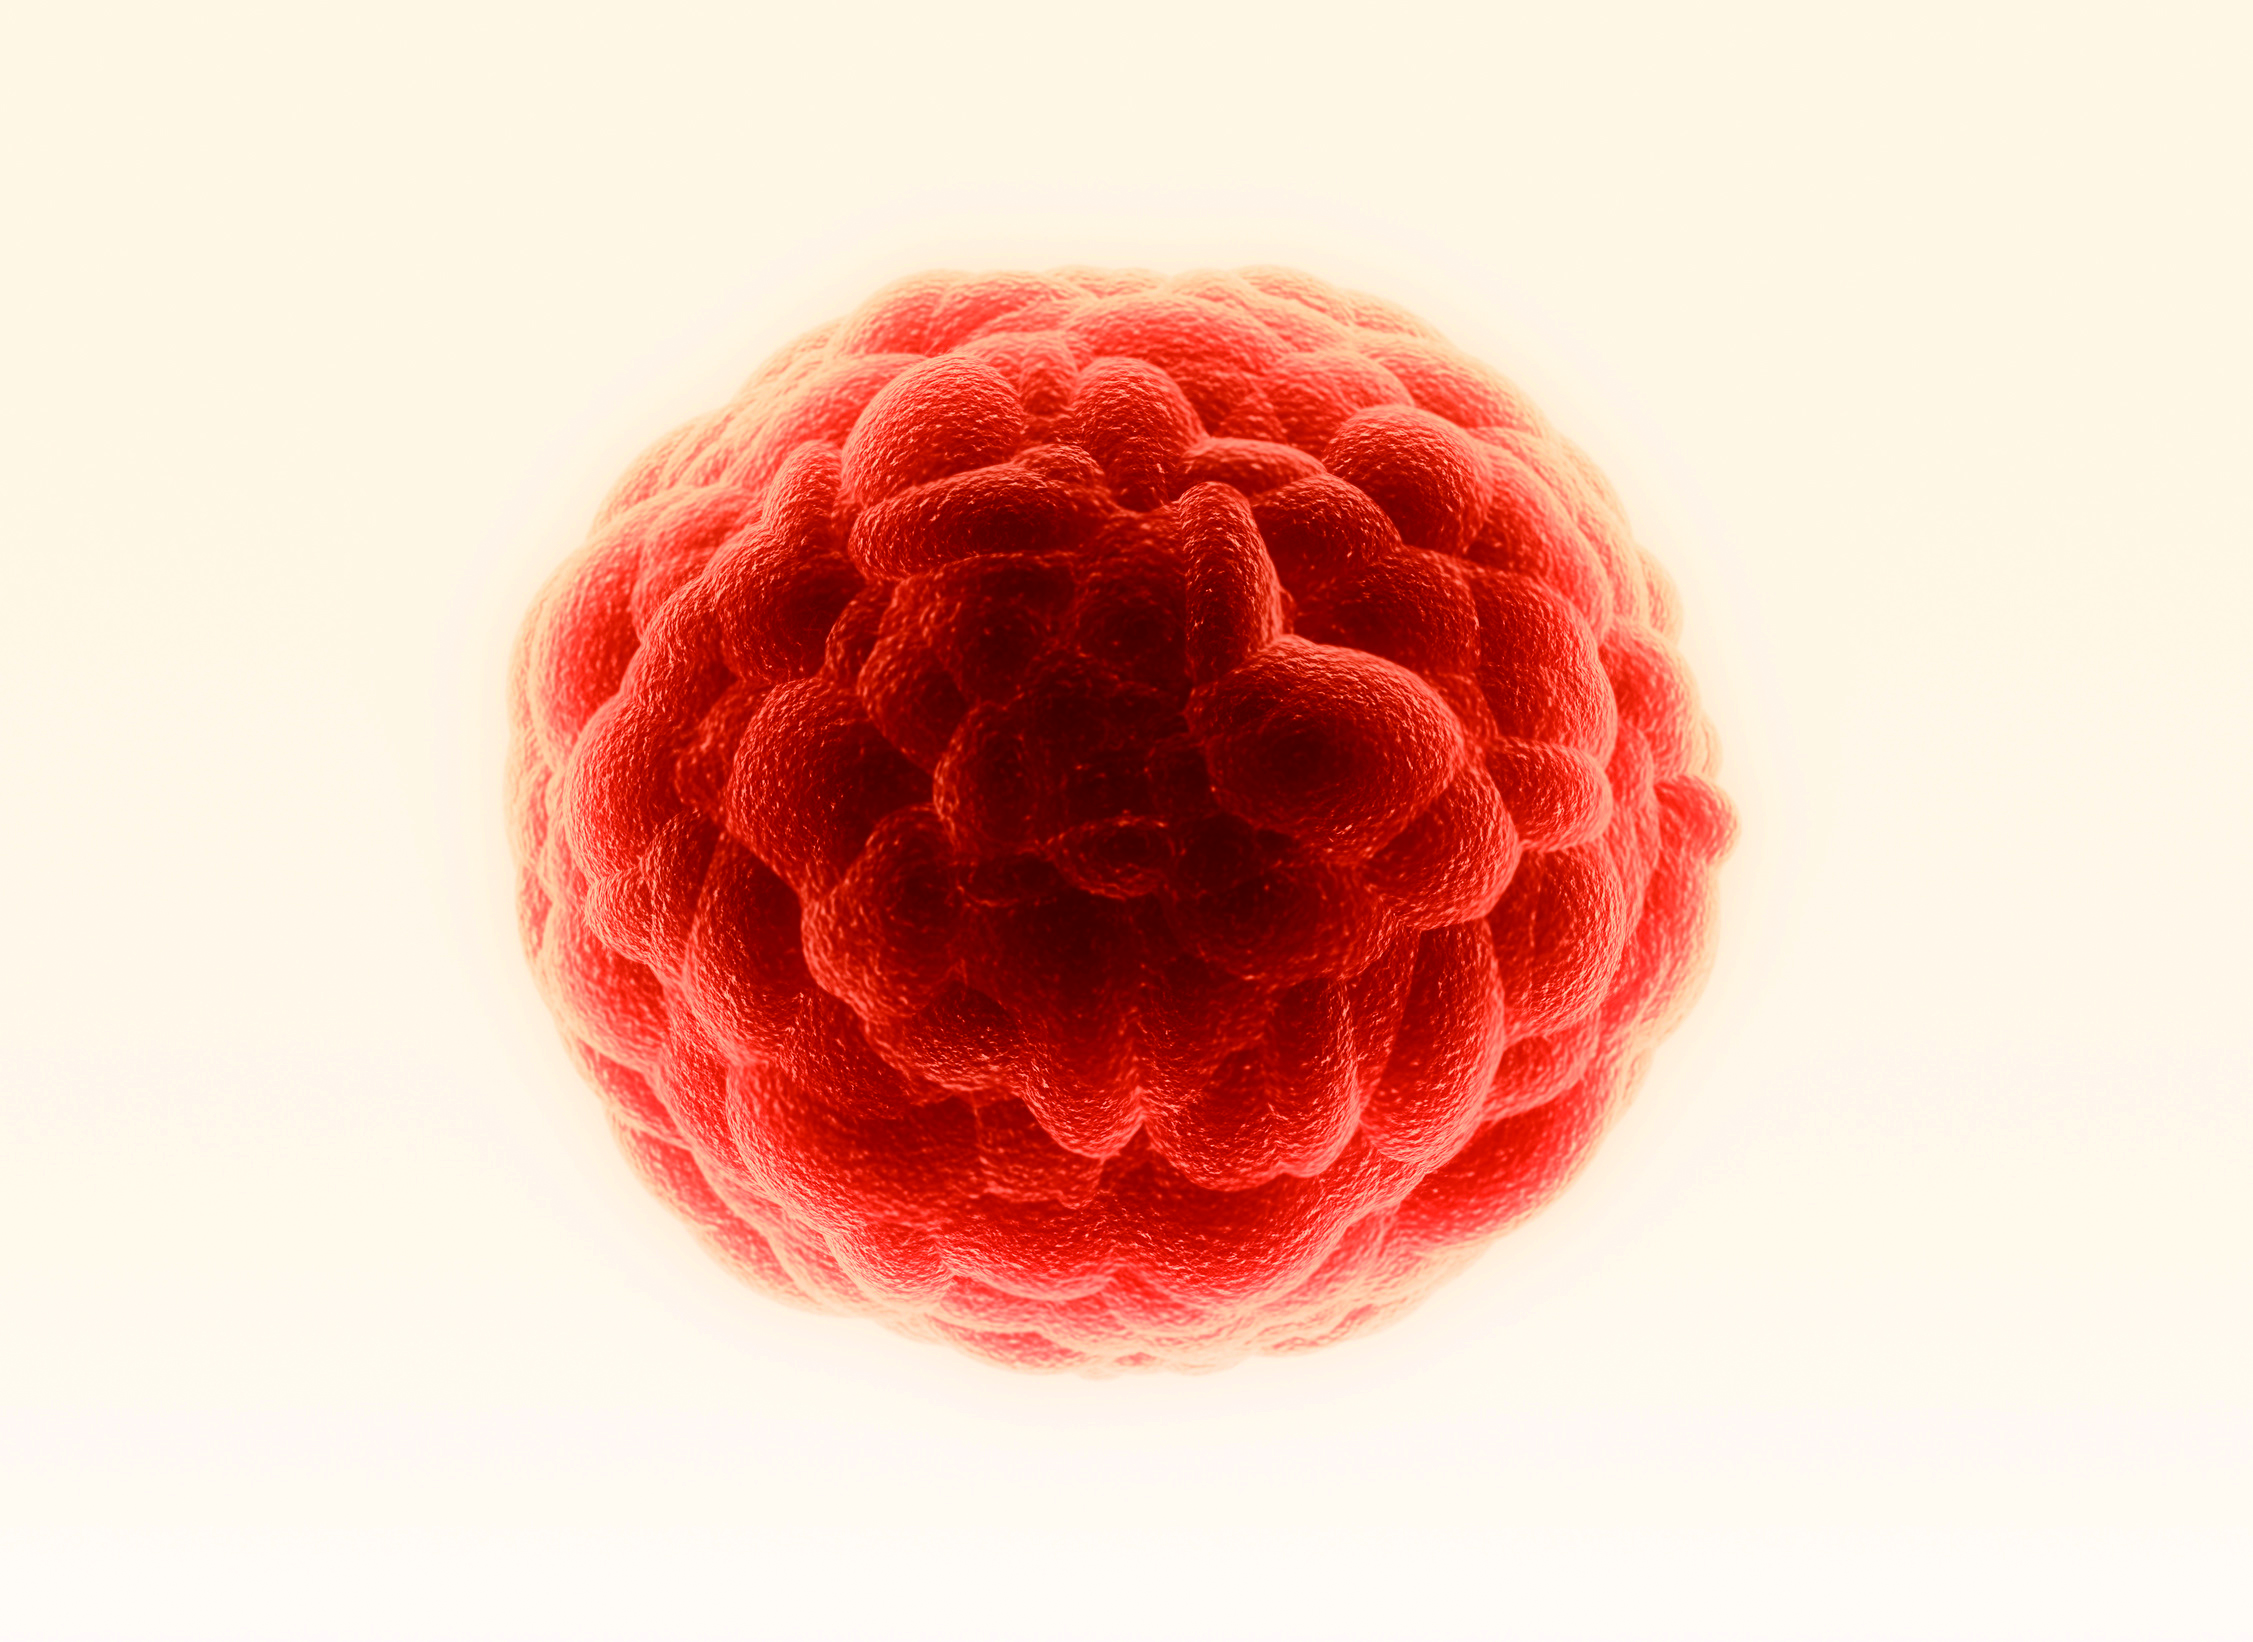 3D-Tumospheres-A-Home-For-Cancer-Stem-Cells